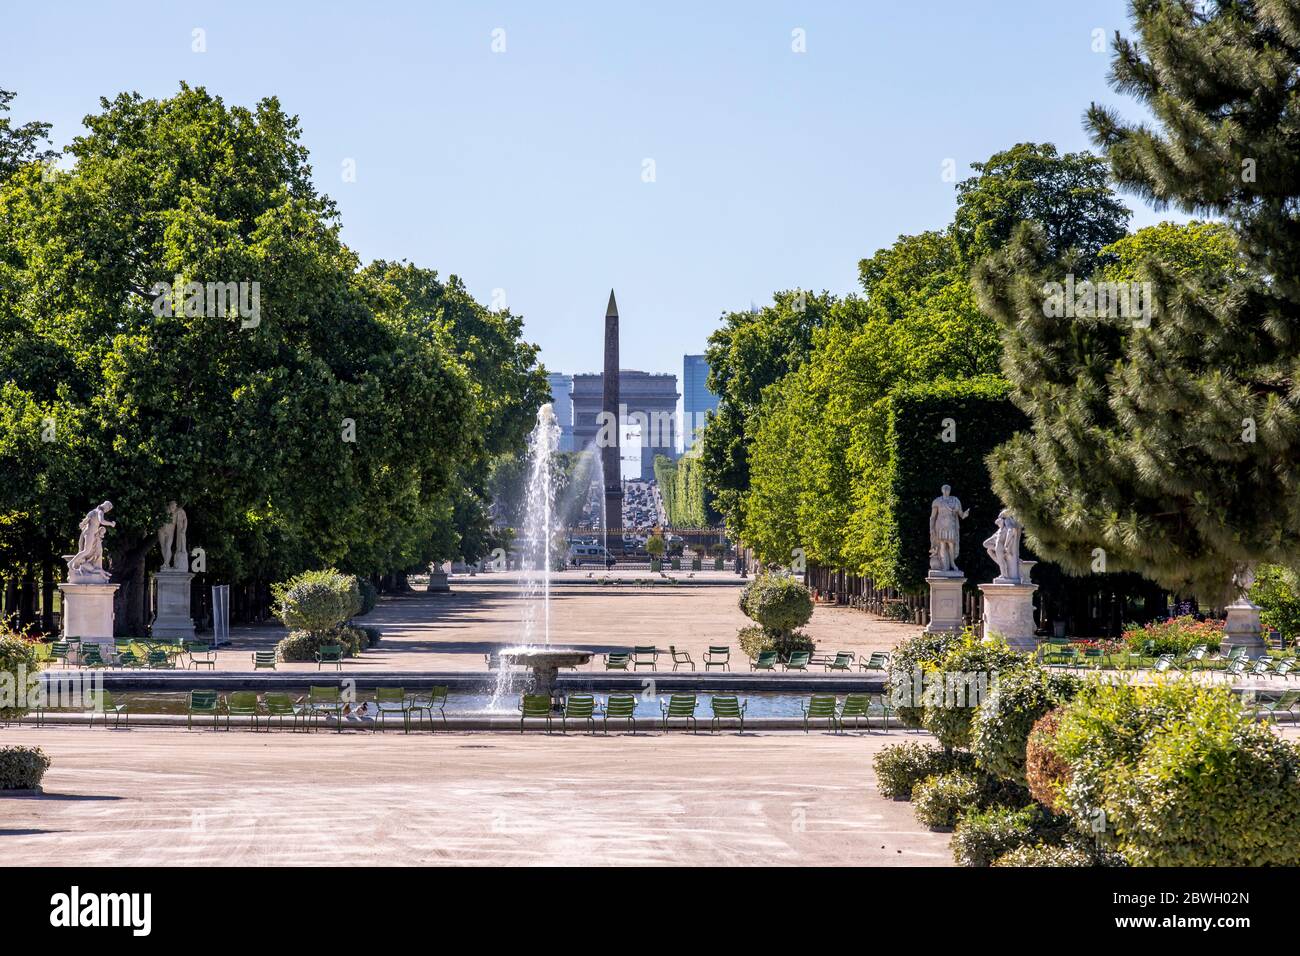 Paris, France - May 29, 2020: View of Place de la Concorde and Arc de Triomphe from Tuileries garden in Paris Stock Photo